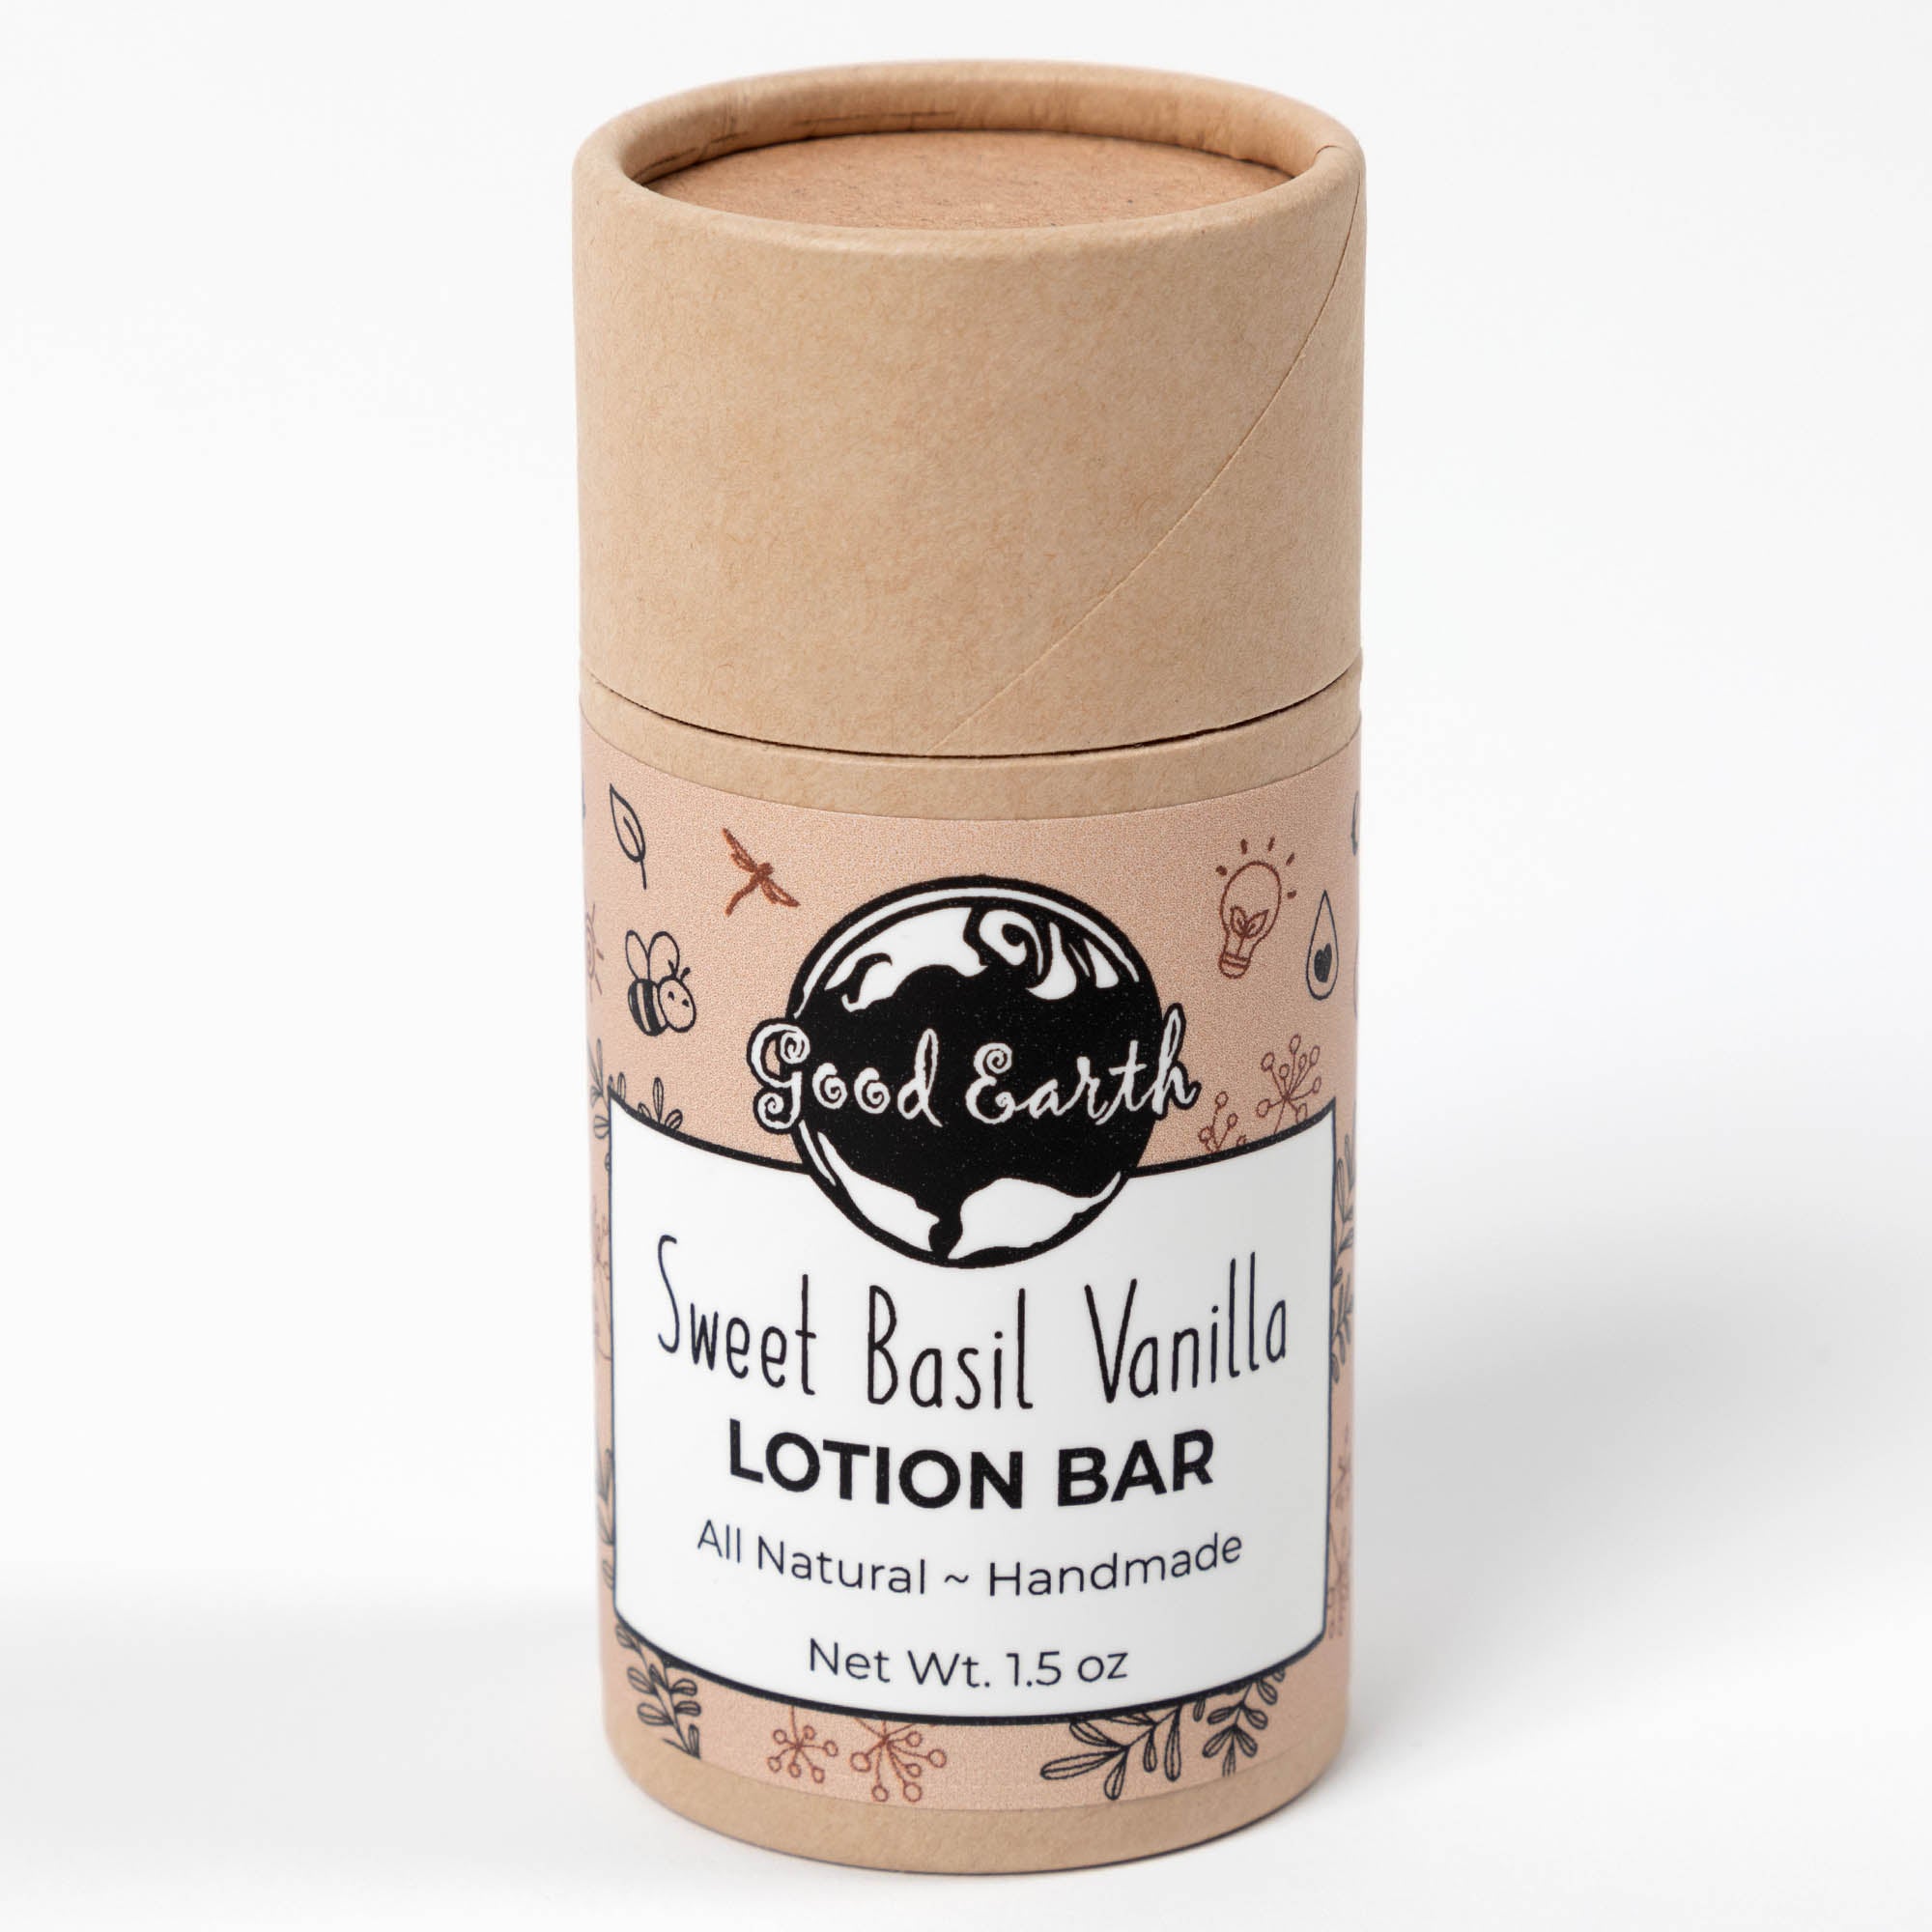 Good Earth Lotion Bar Ecotube - Sweet Basil Vanilla